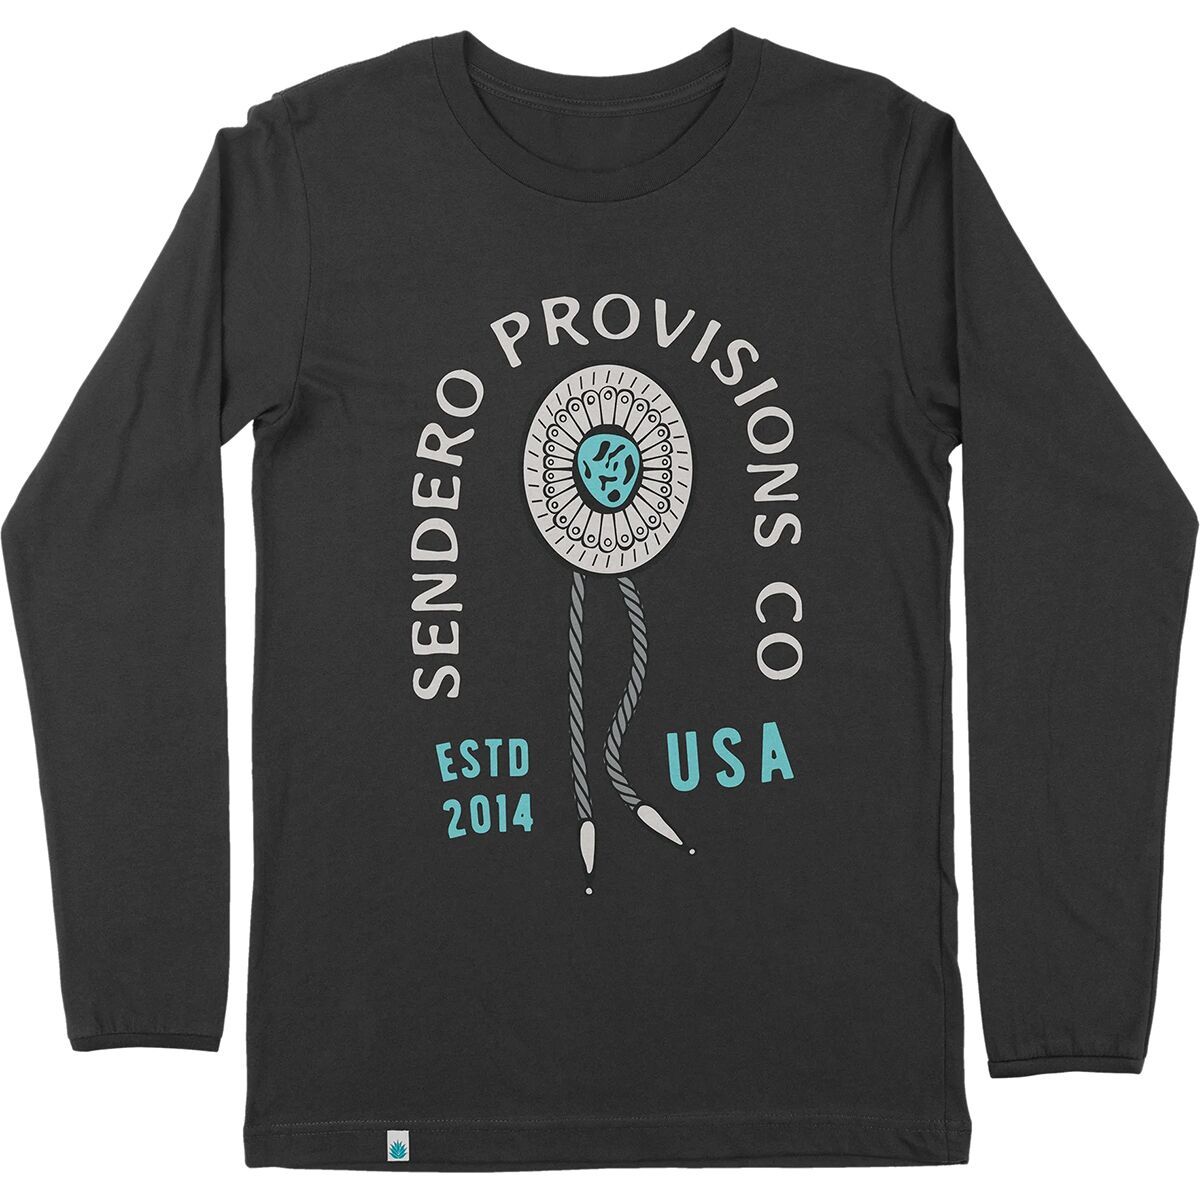 Sendero Provisions Co. El Bolo Long-Sleeve T-Shirt - Men's